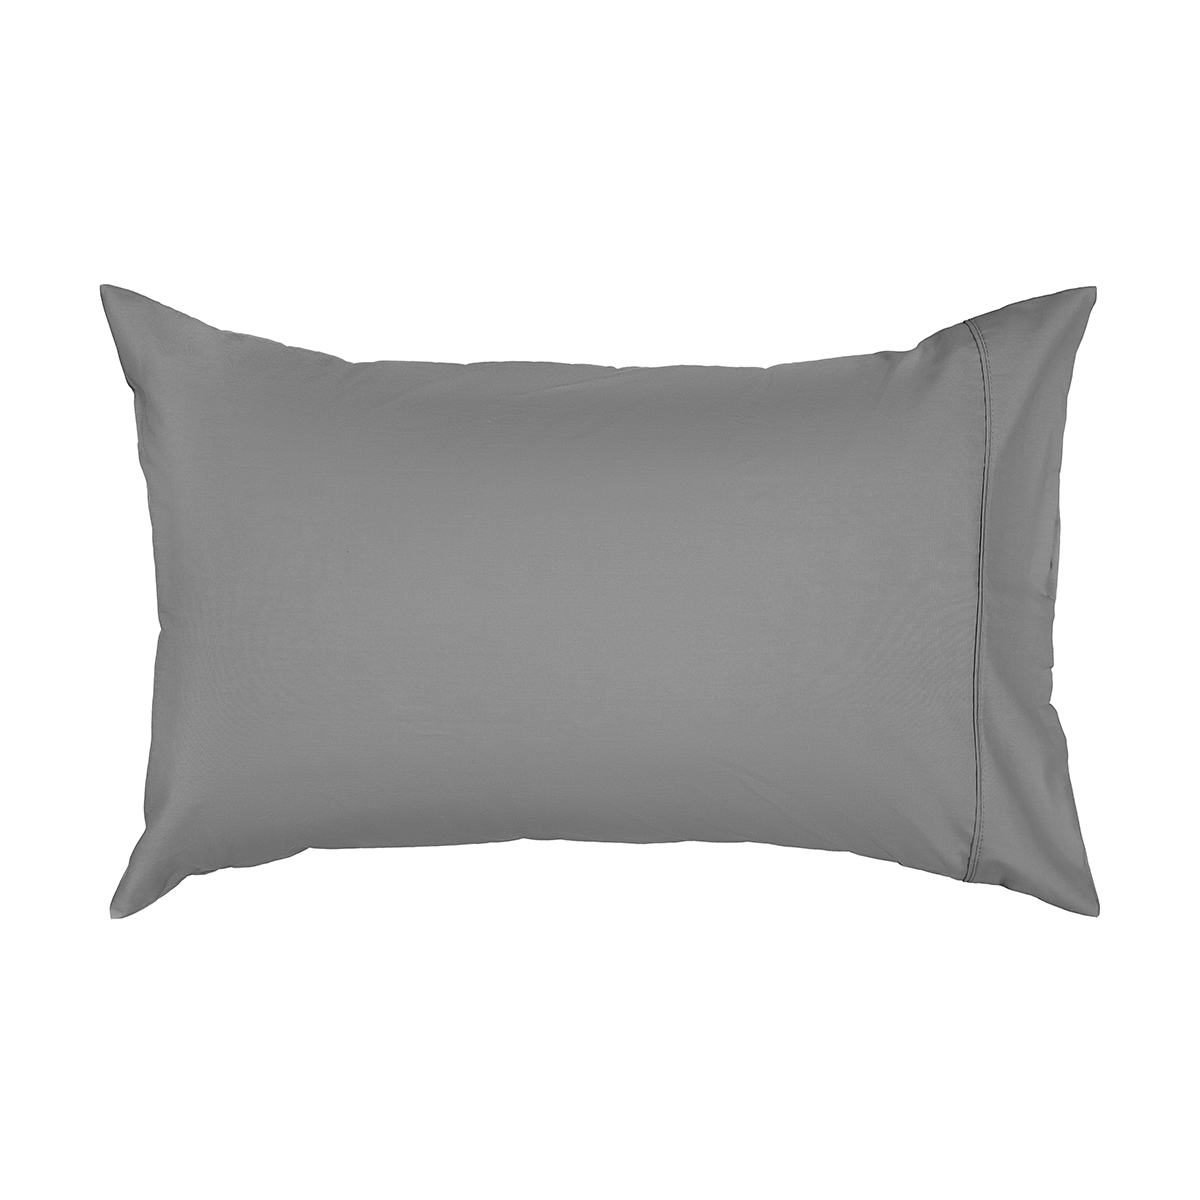 225 Thread Count Pillowcase - Grey | Kmart